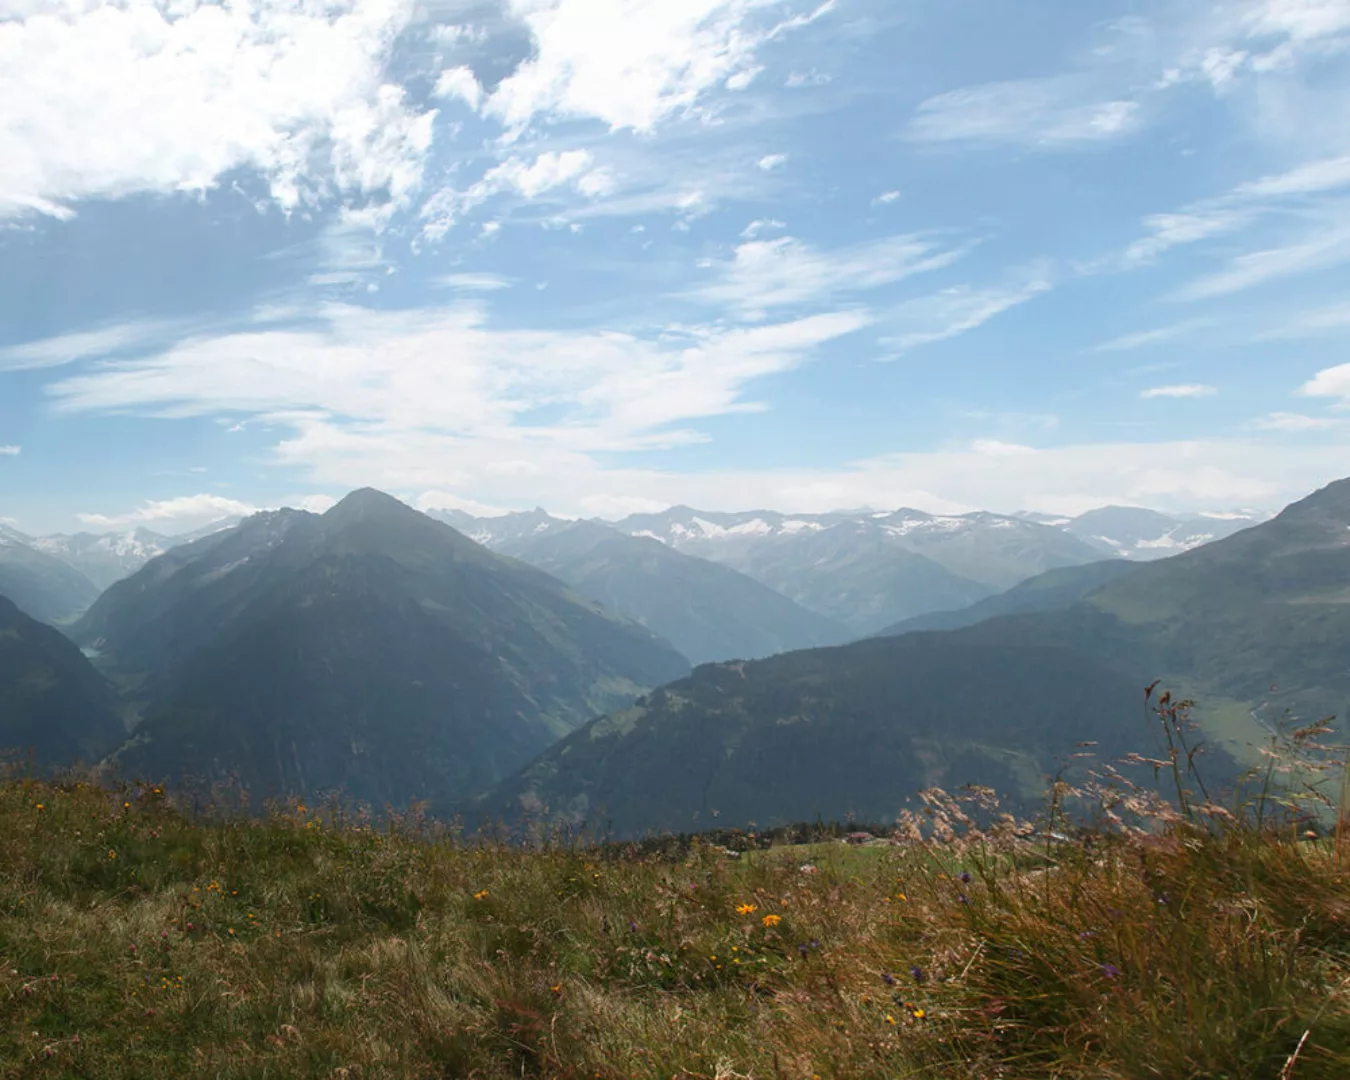 Fototapete "Alpenblick" 4,00x2,50 m / Glattvlies Perlmutt günstig online kaufen